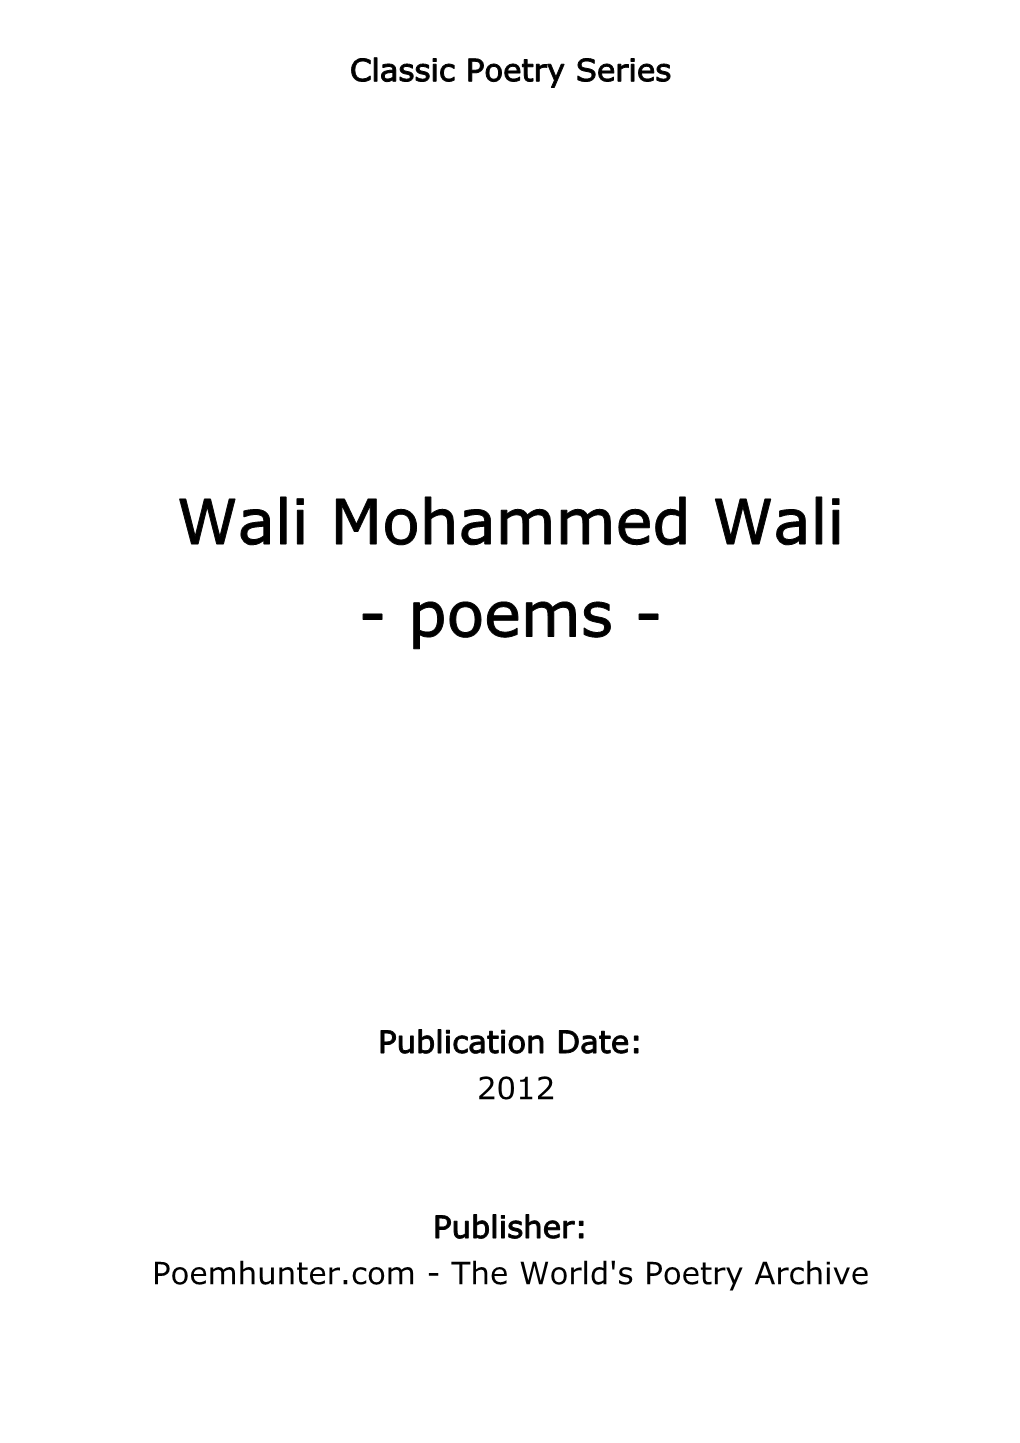 Wali Mohammed Wali - Poems